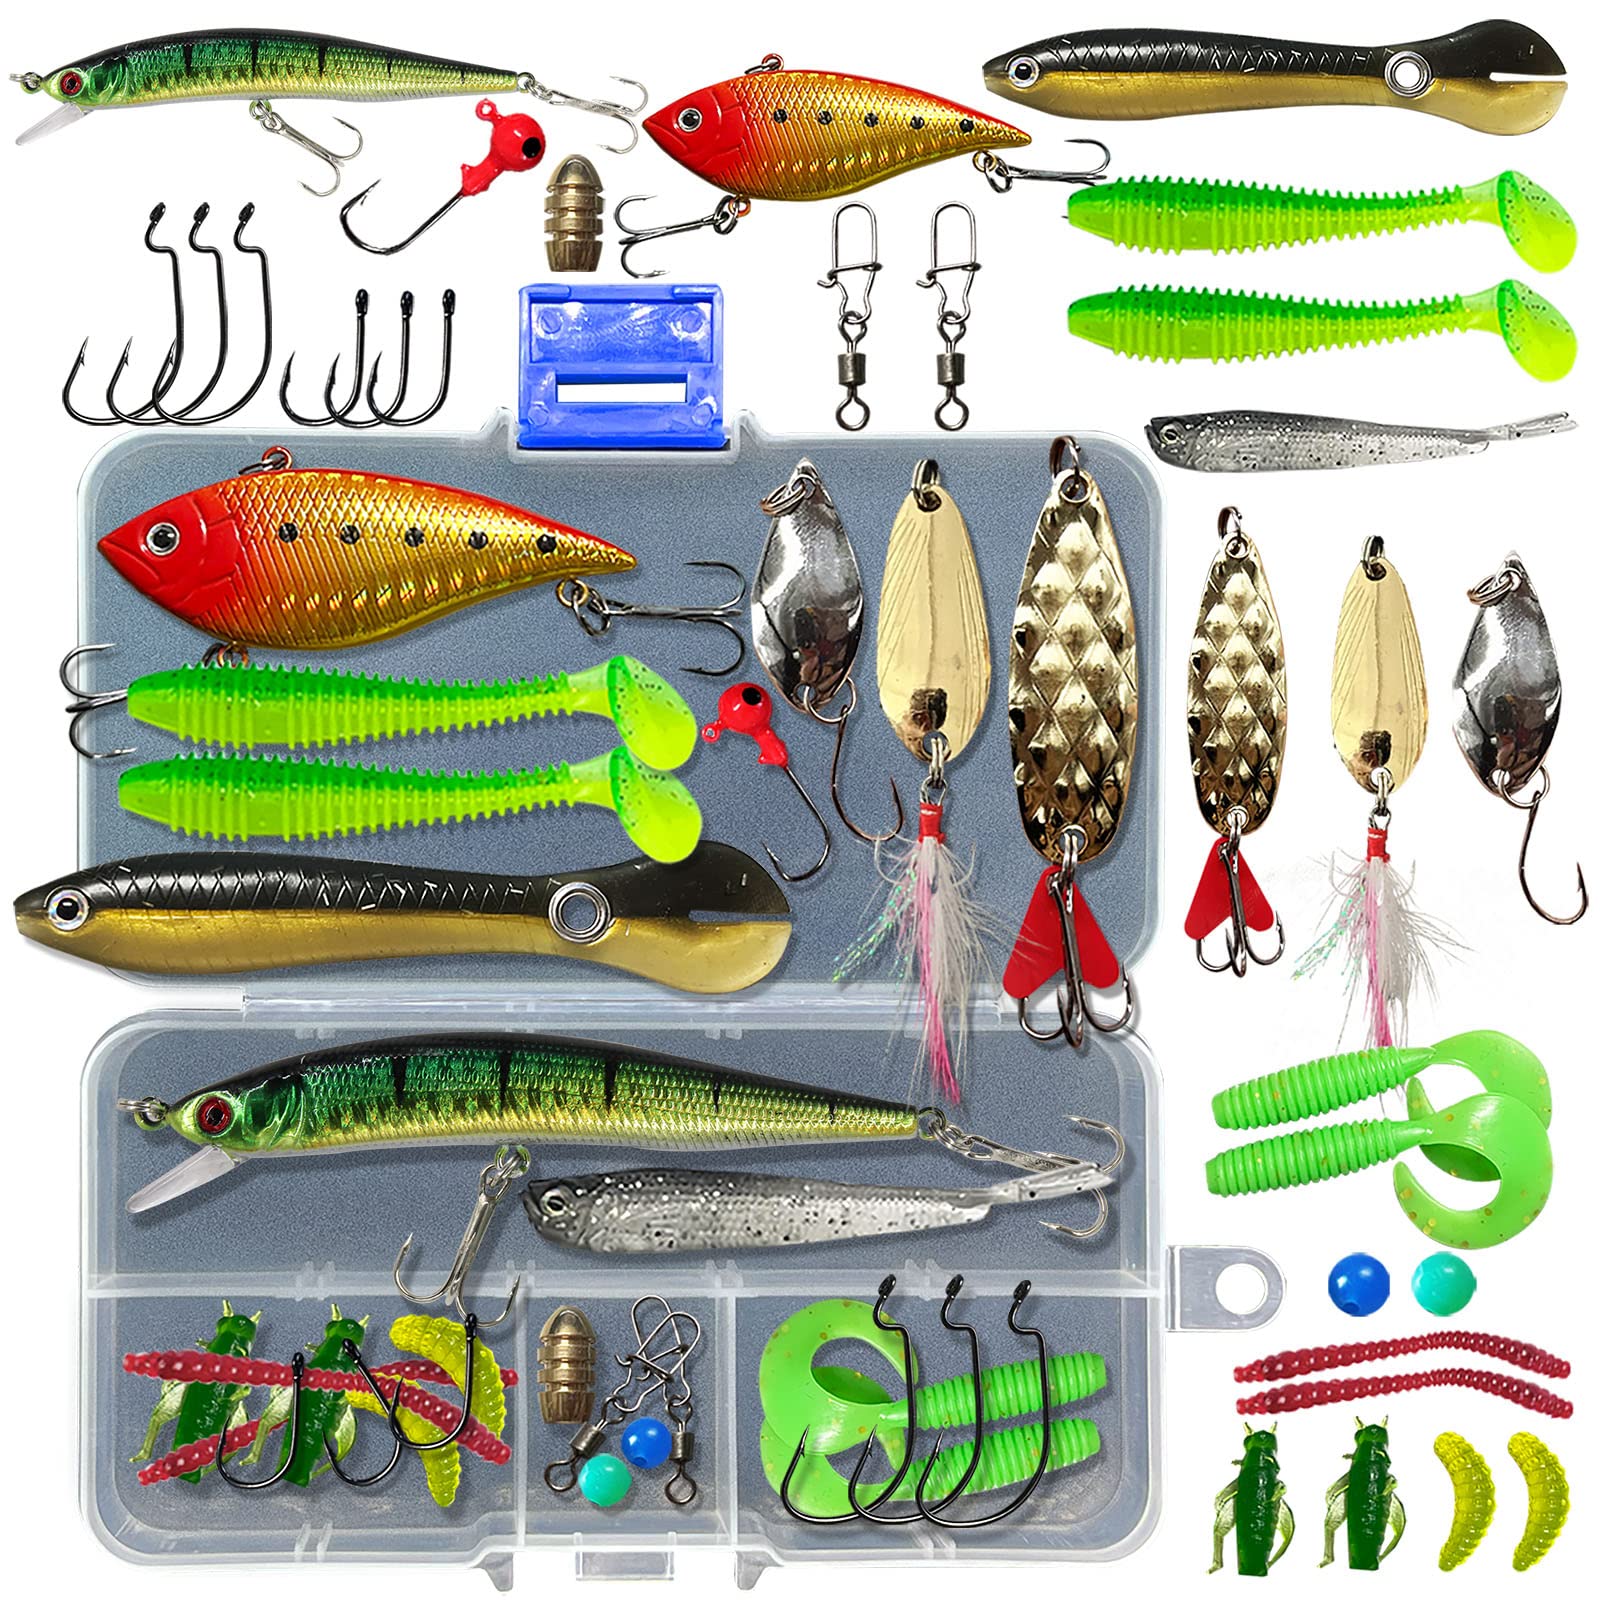 Fishing Soft Bait, Portable 2 Box Soft Fishing Lures For